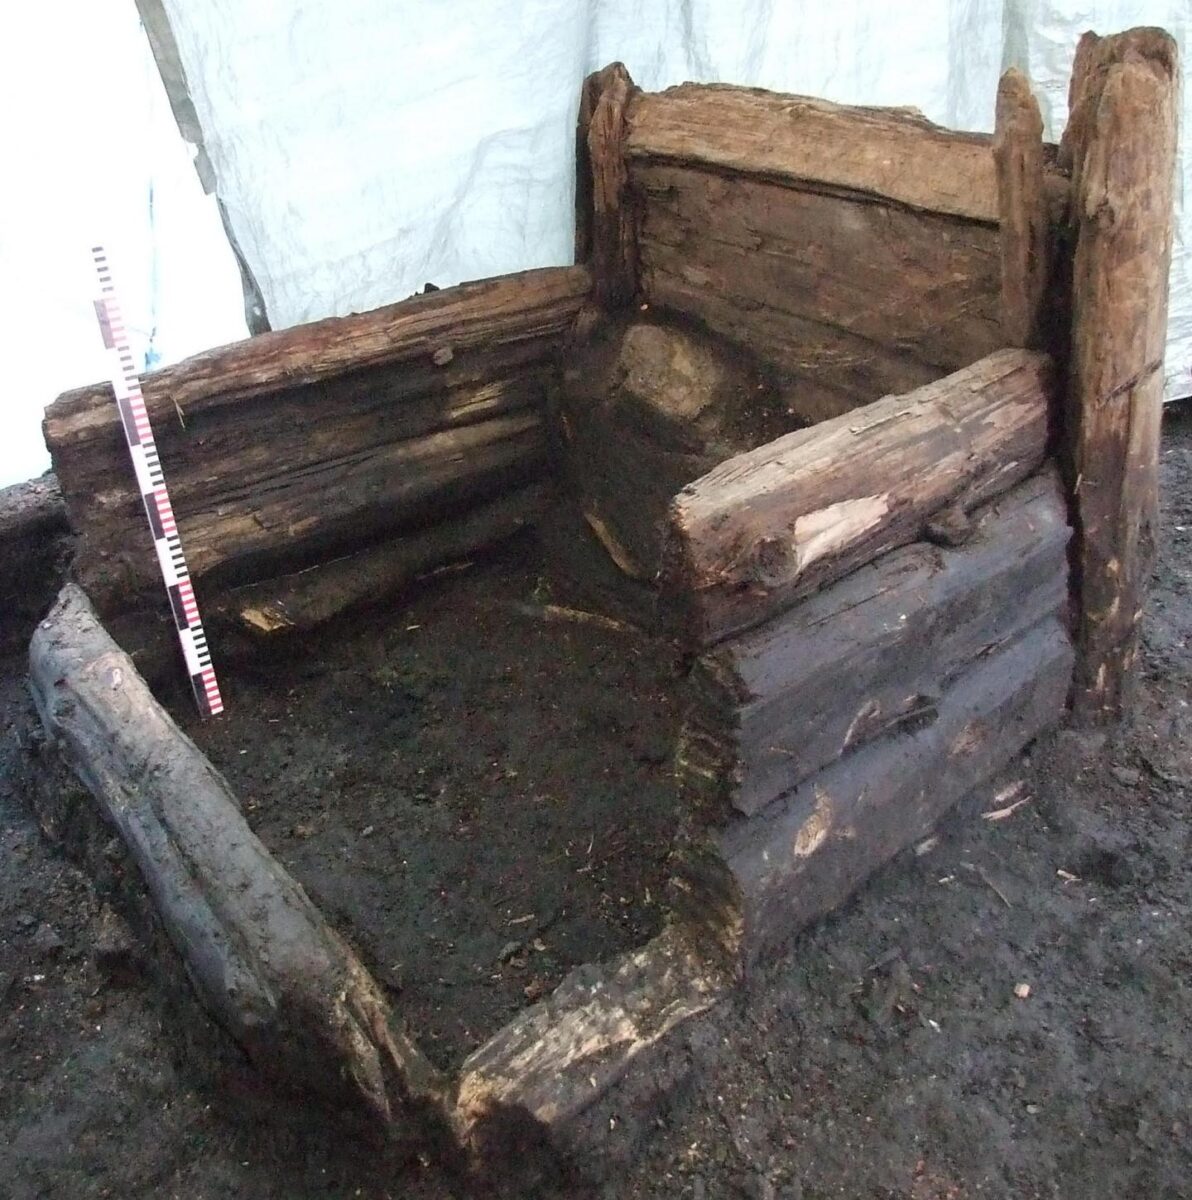 The medieval latrine at Riga during excavation. Credit: Uldis Kalējis